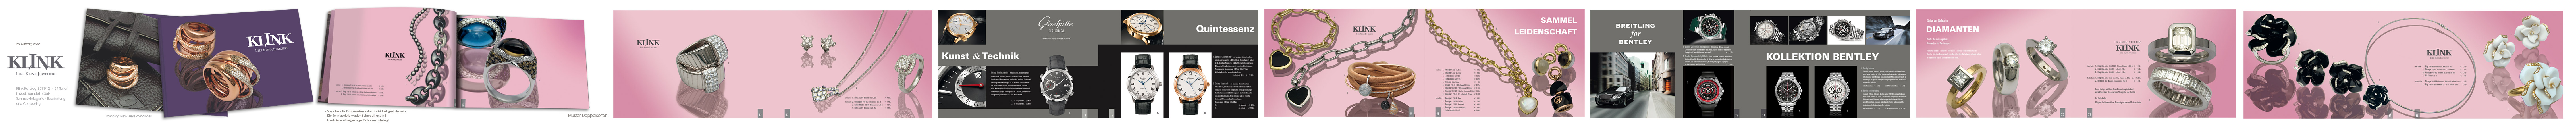 Katalog Klink Juweliere 2011